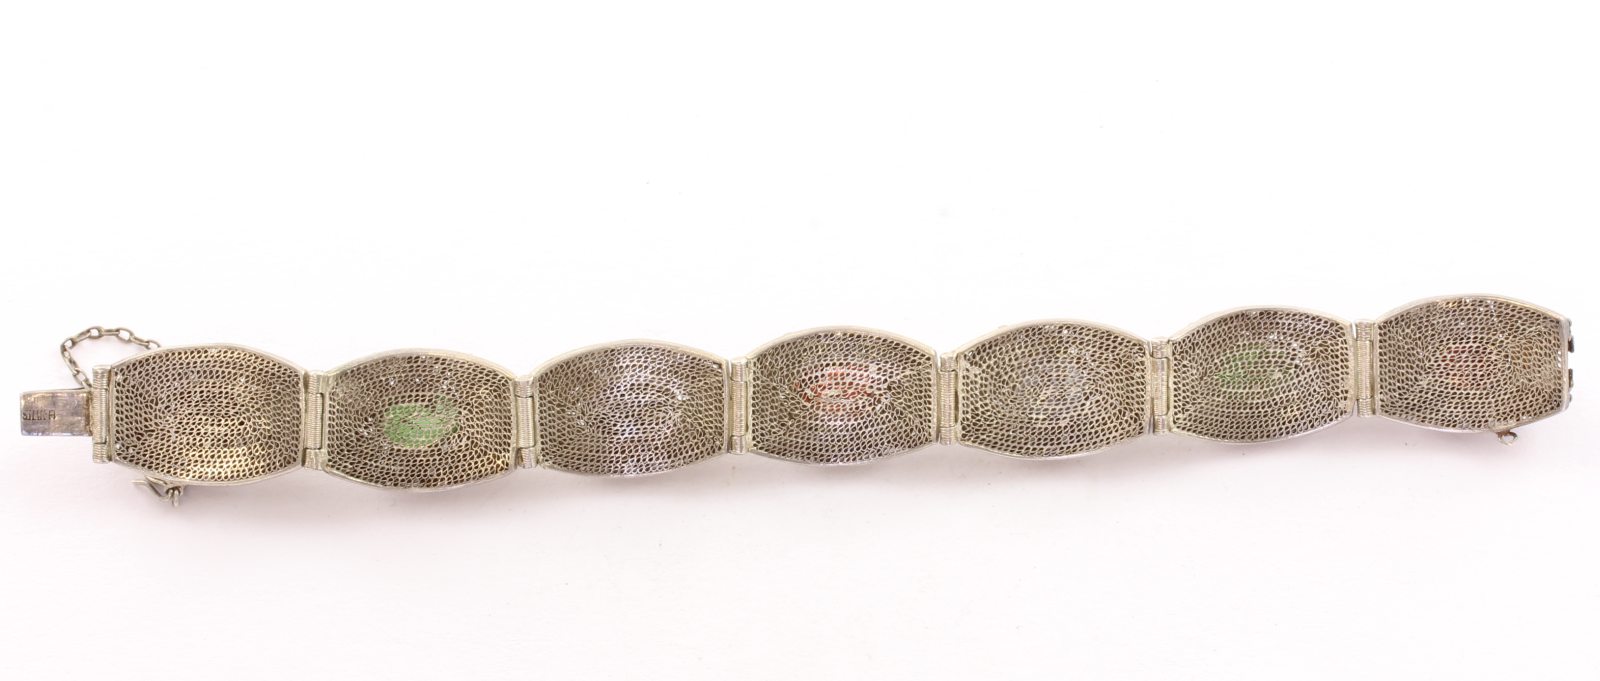 Armband, Silber, Edelsteine, China - Image 2 of 2